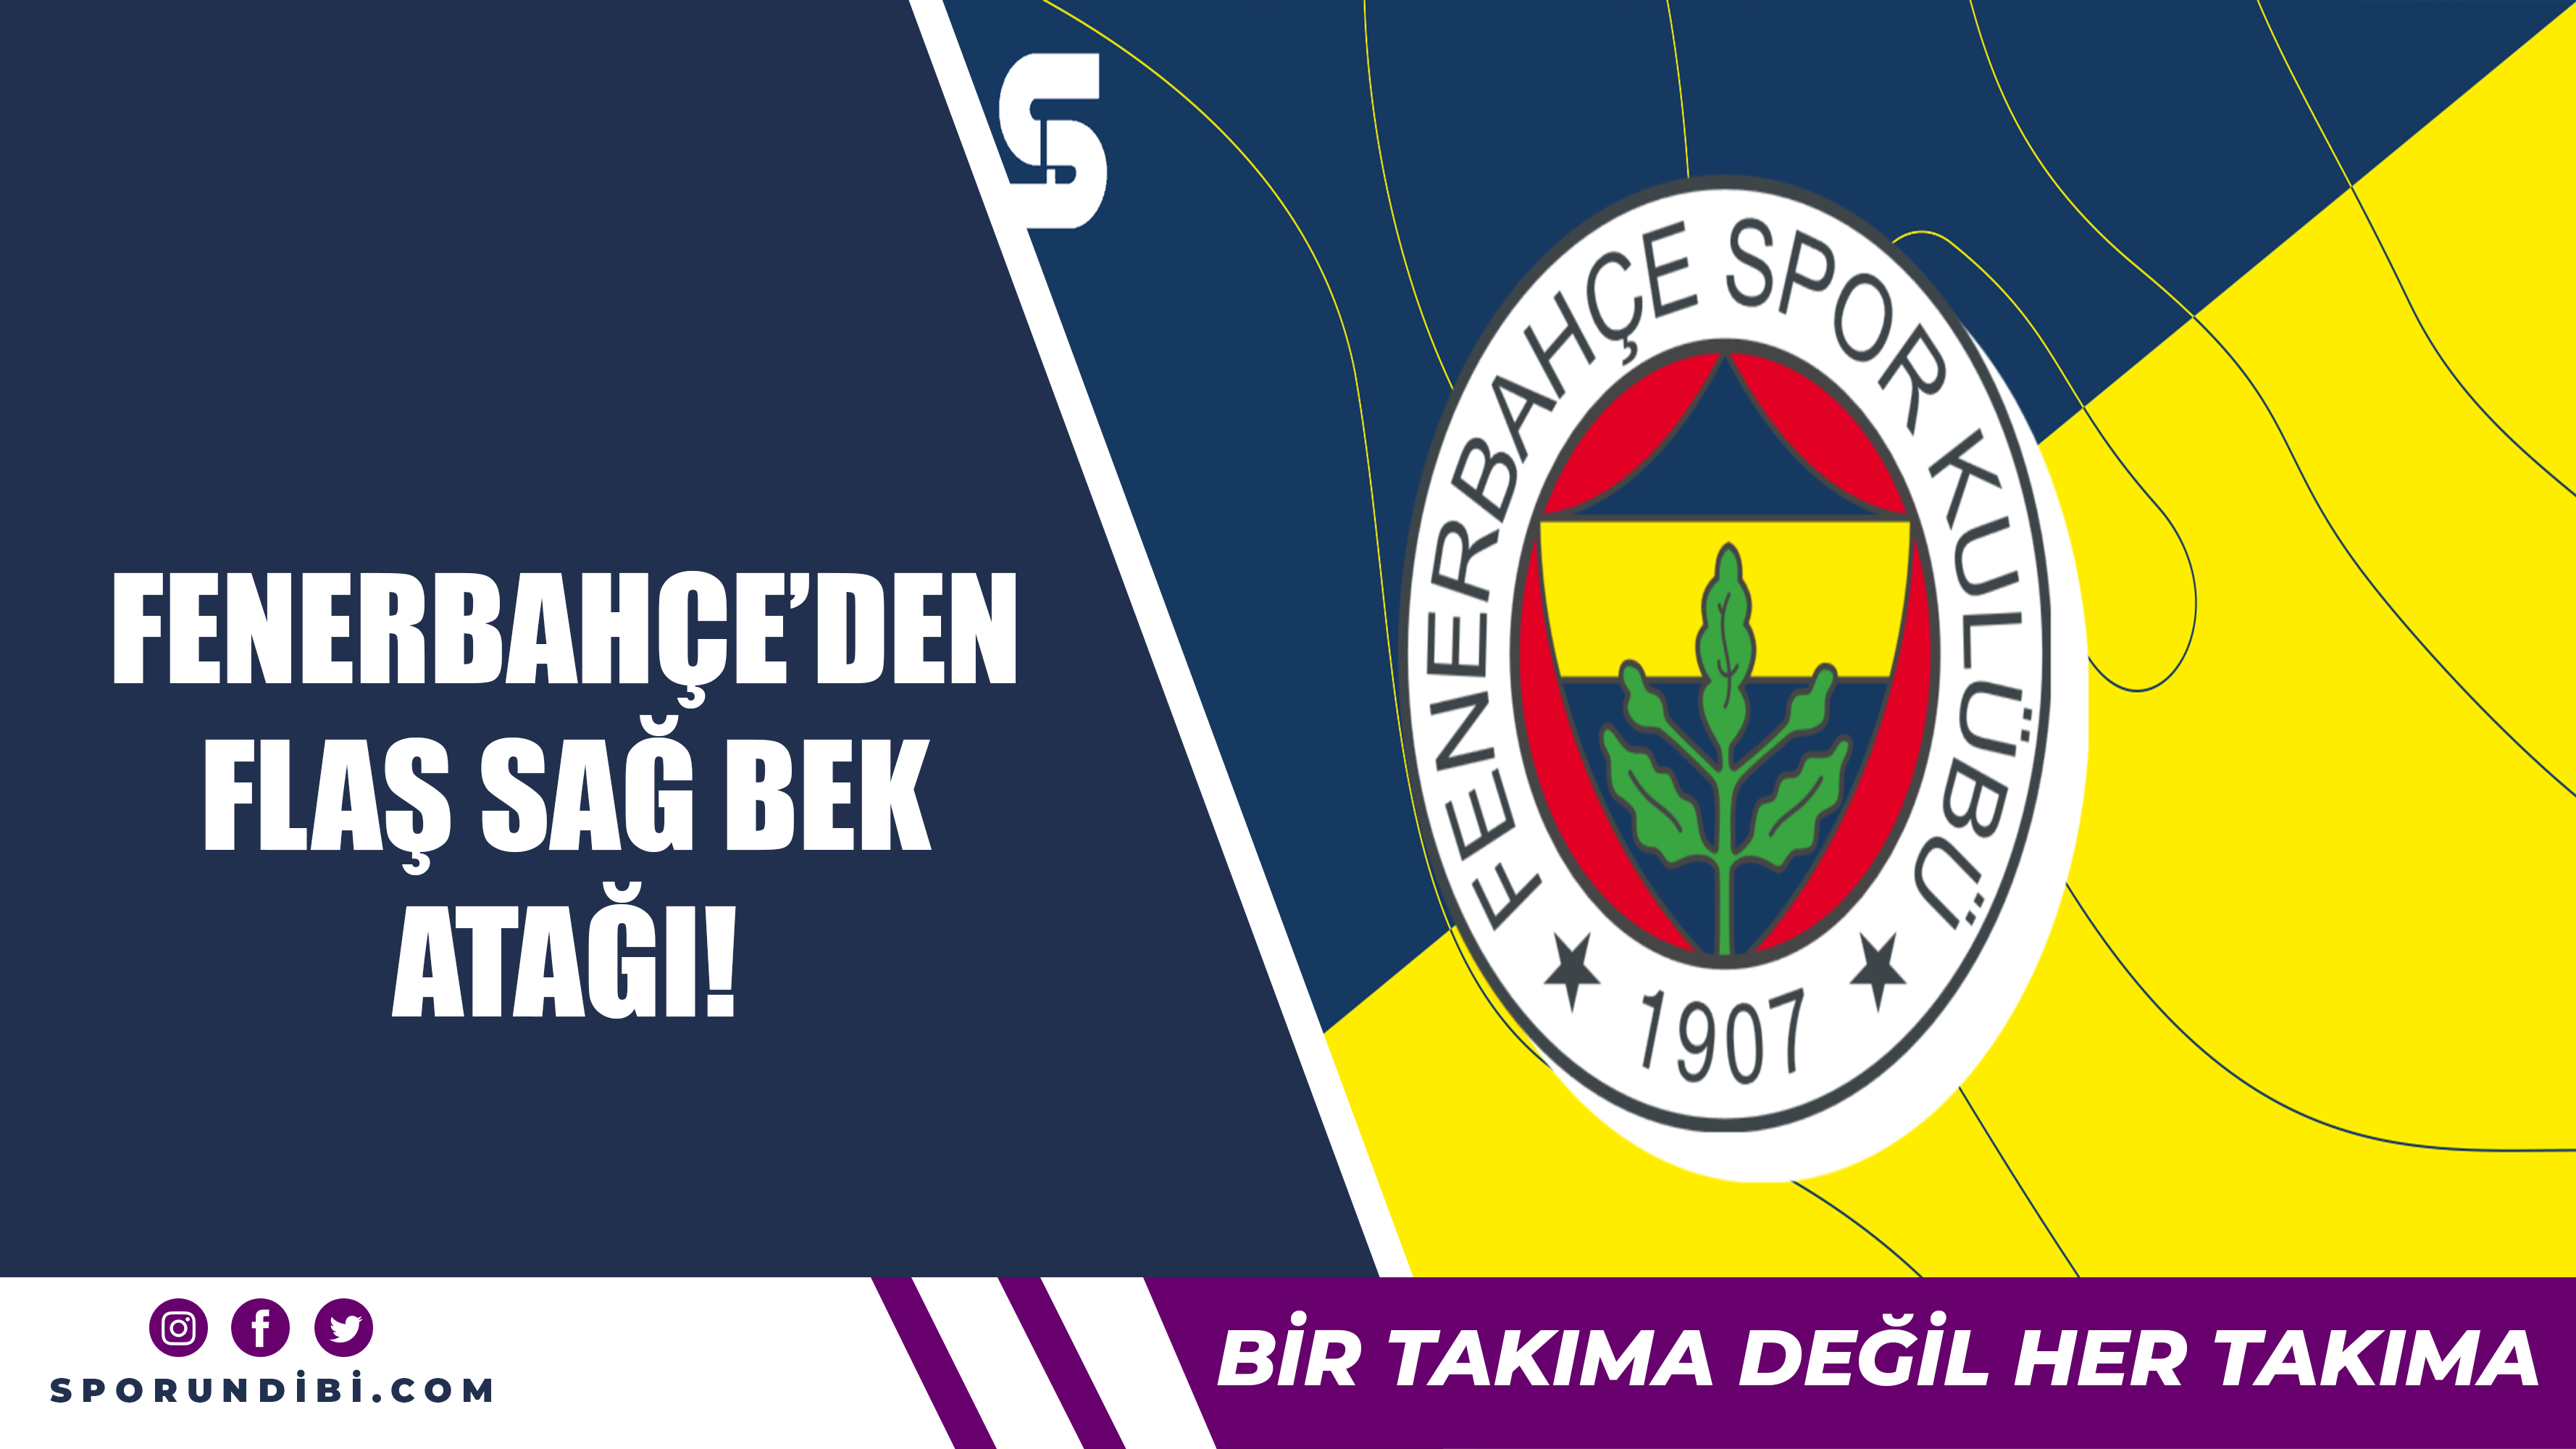 Fenerbahçe'den flaş sağ bek atağı!